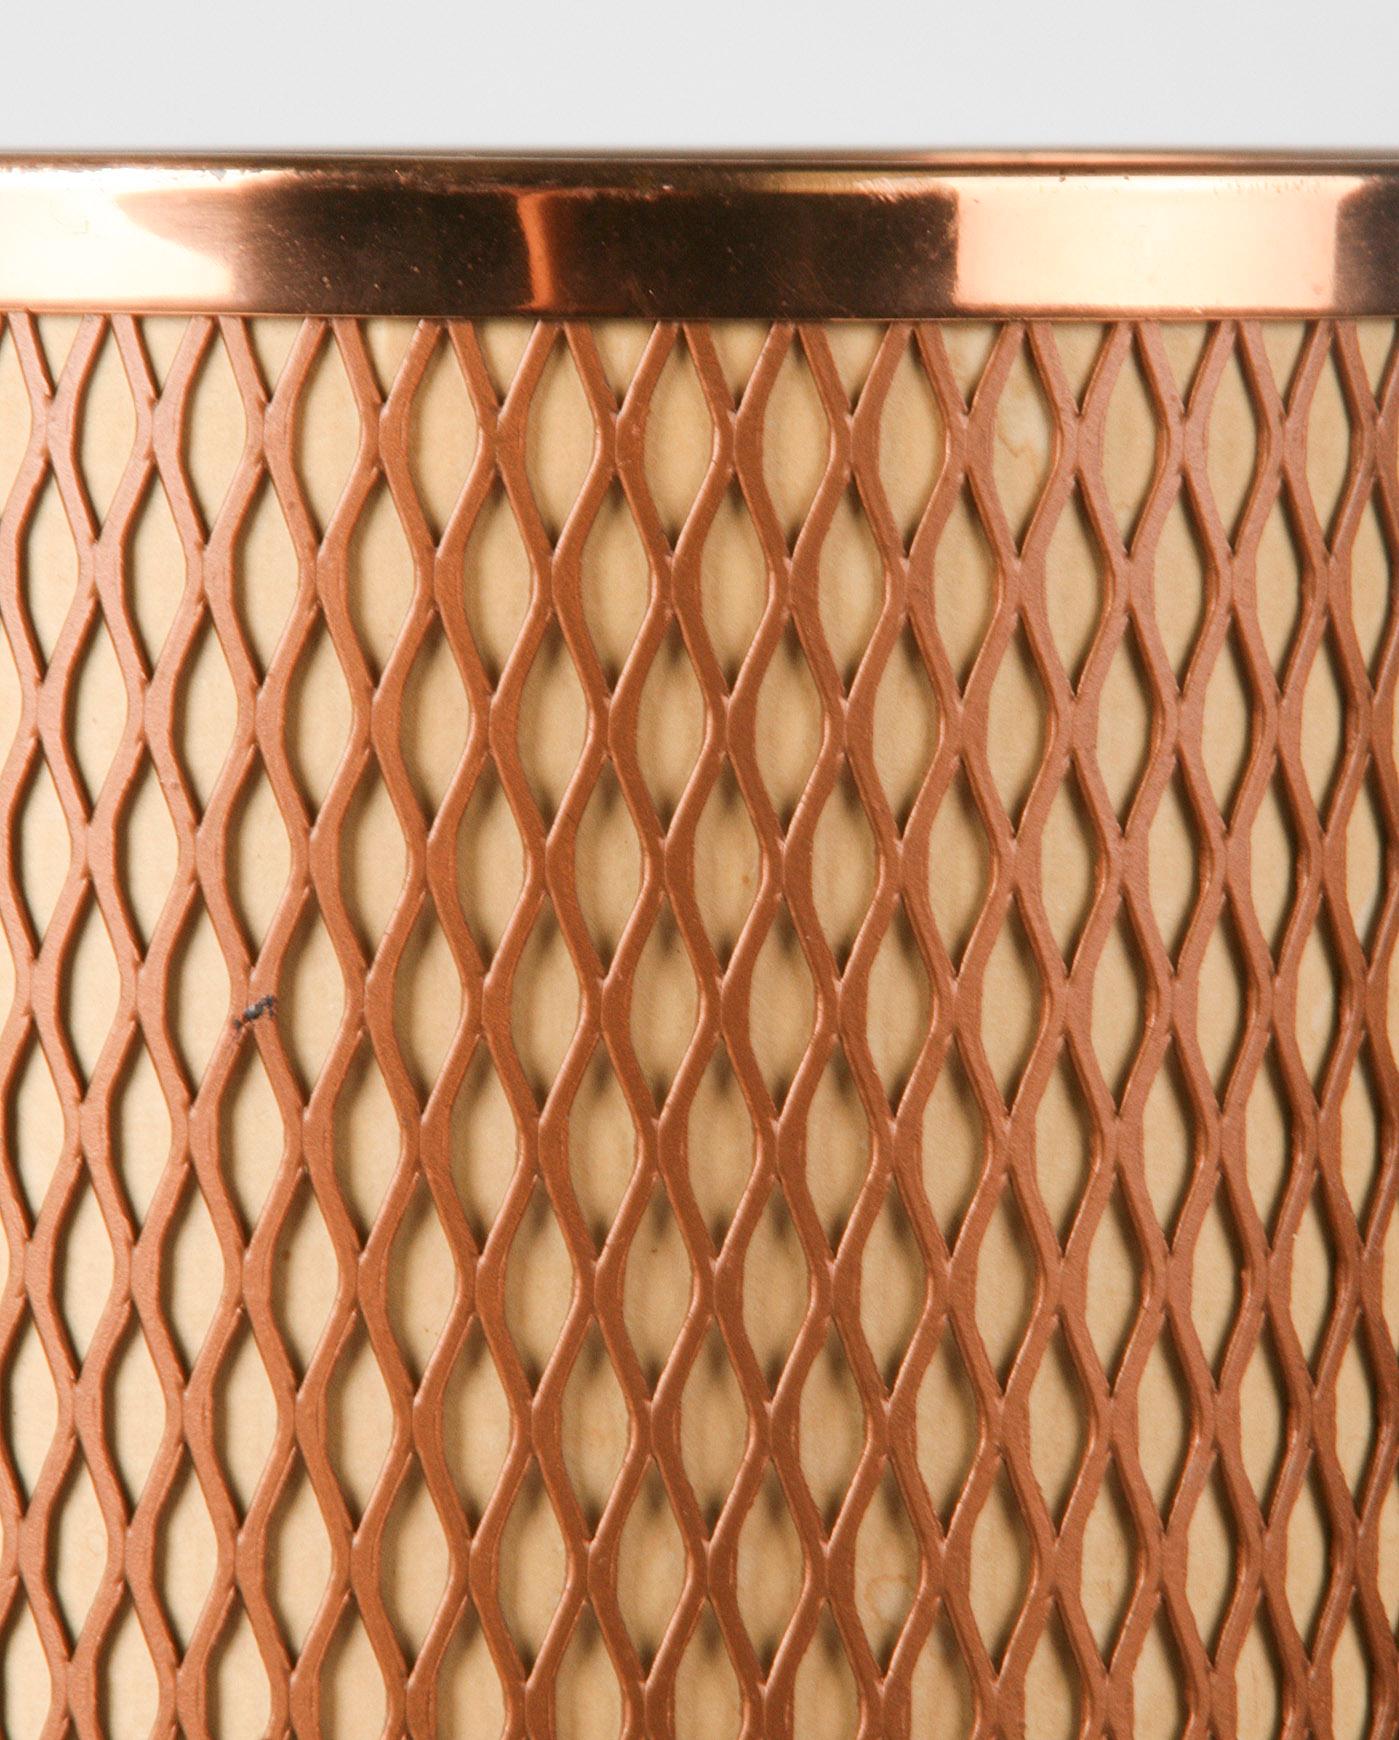 Mid-Century Modern Midcentury Table Lamp with Diamonds Lattice Pattern Copper Shade